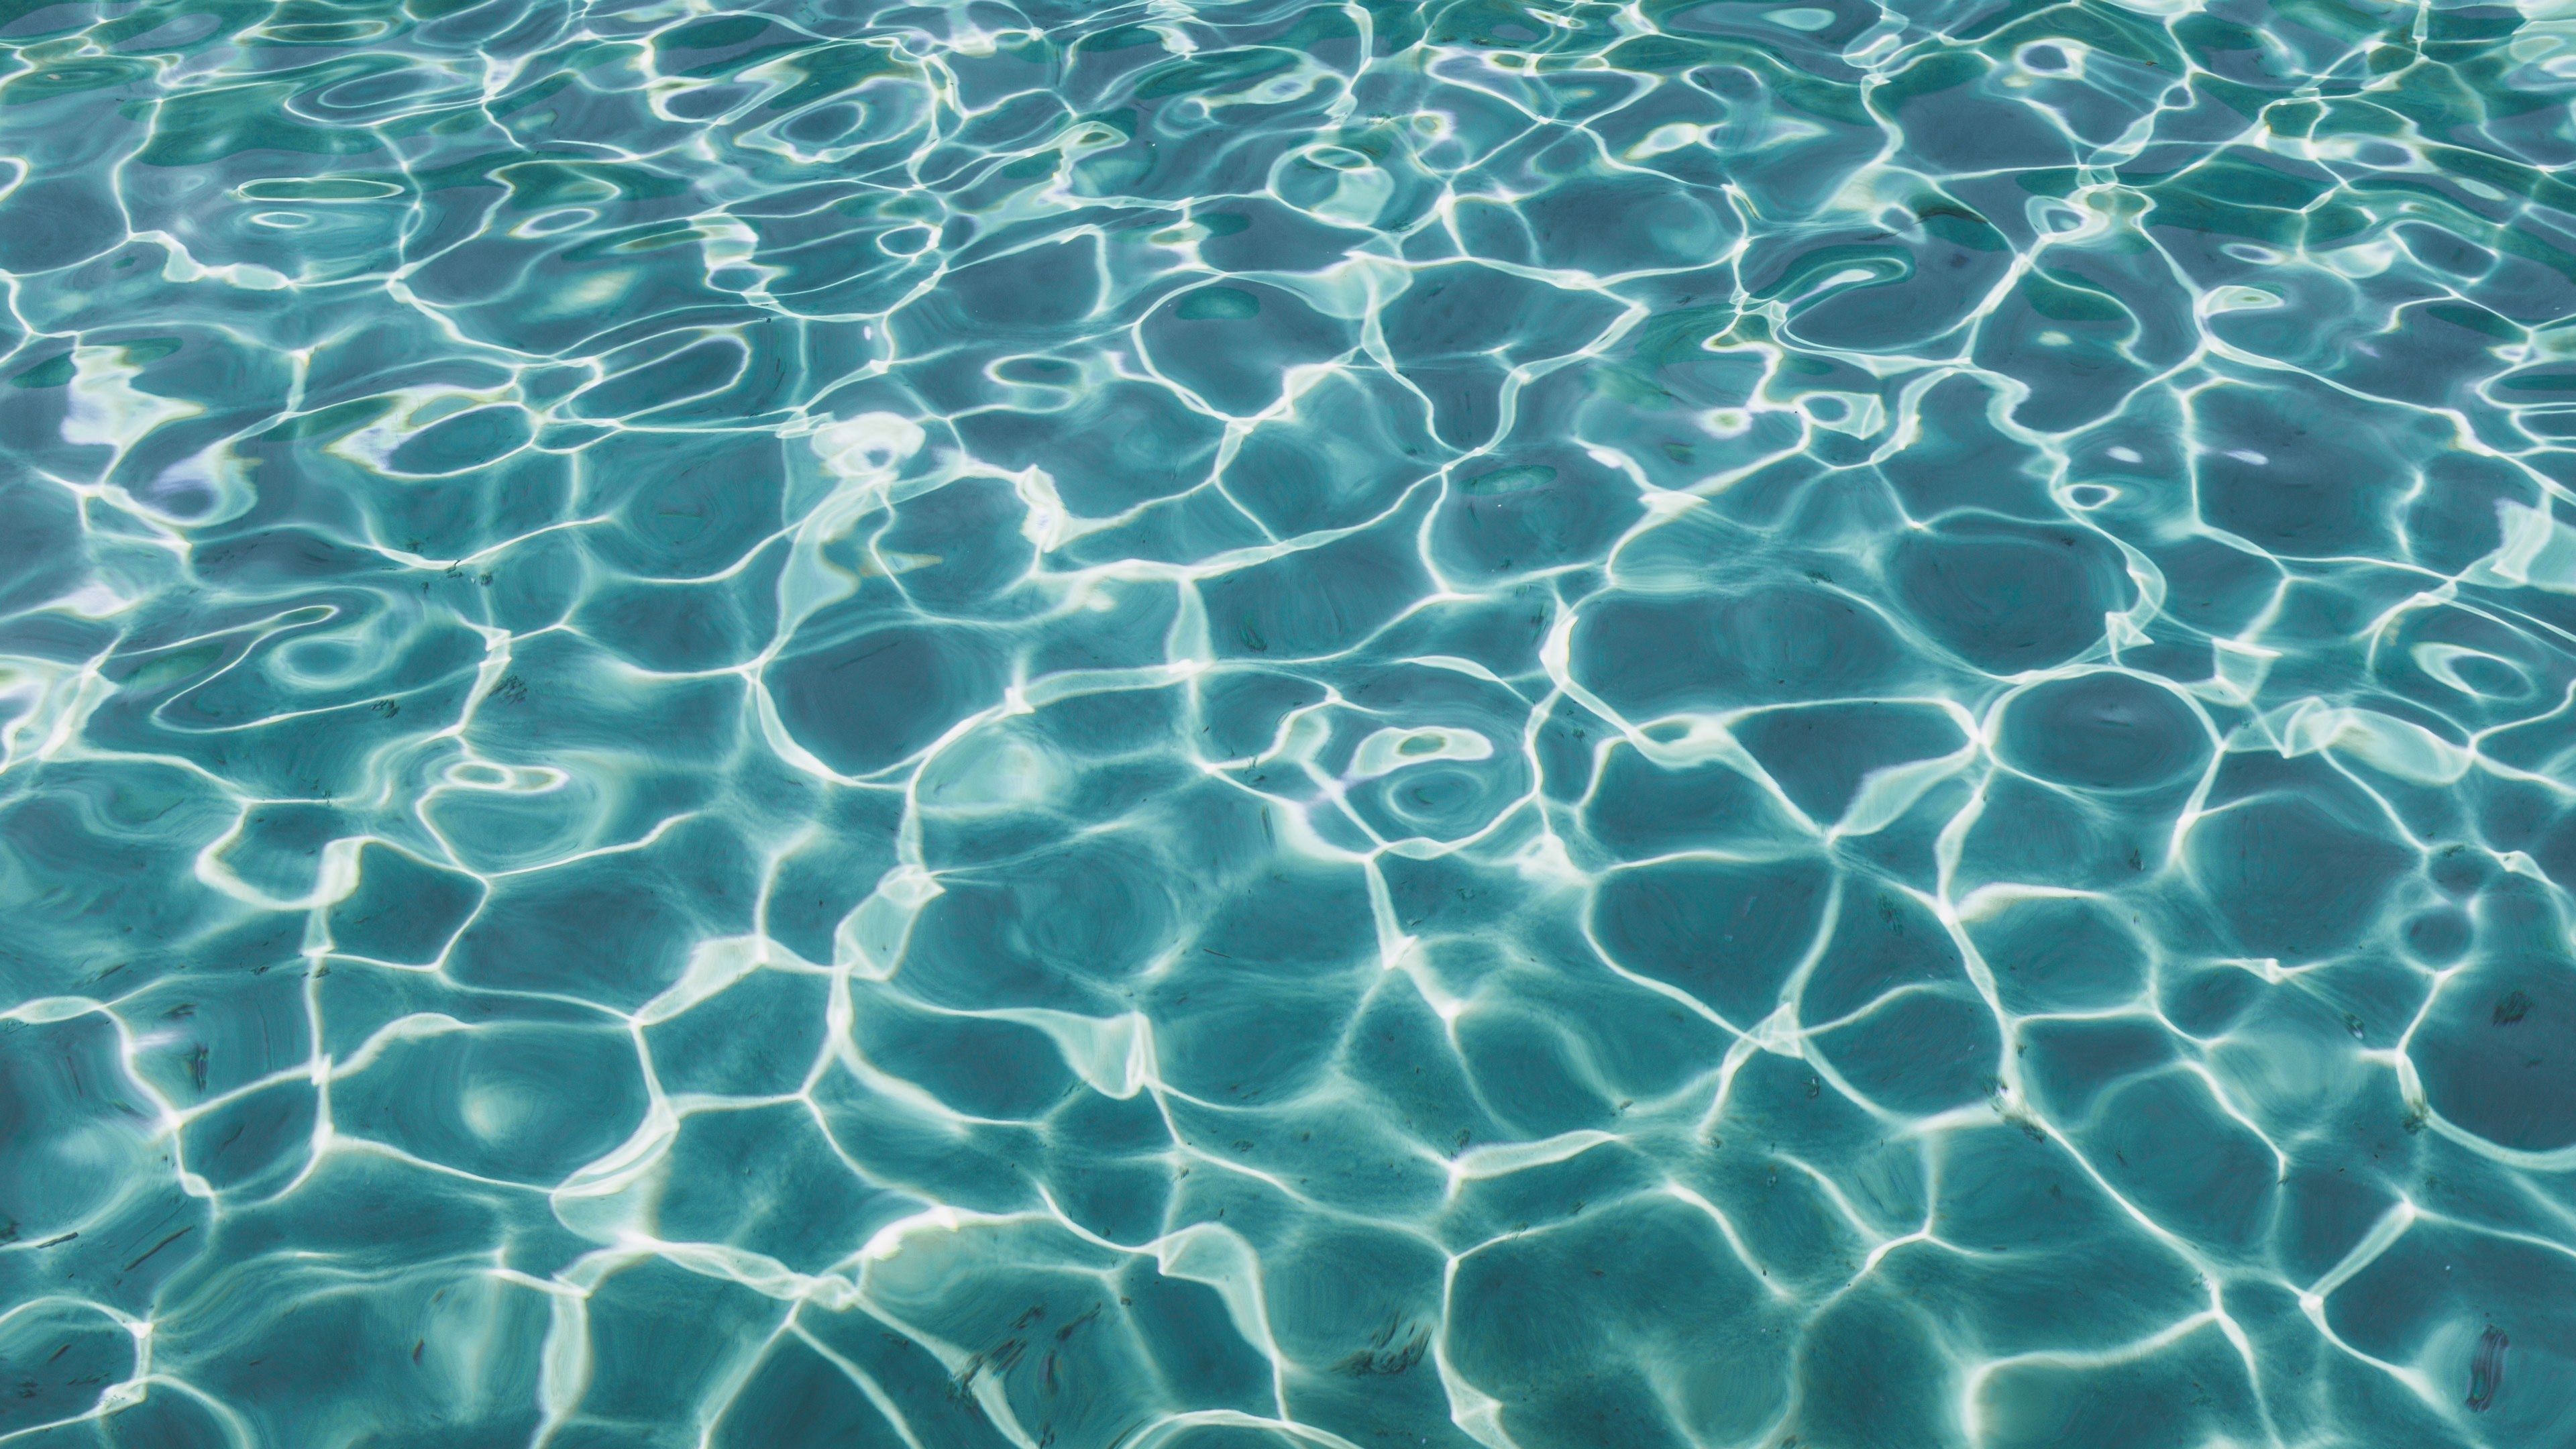 Wallpaper / water pool swimming pool and reflection HD 4k wallpaper free download - Swimming pool